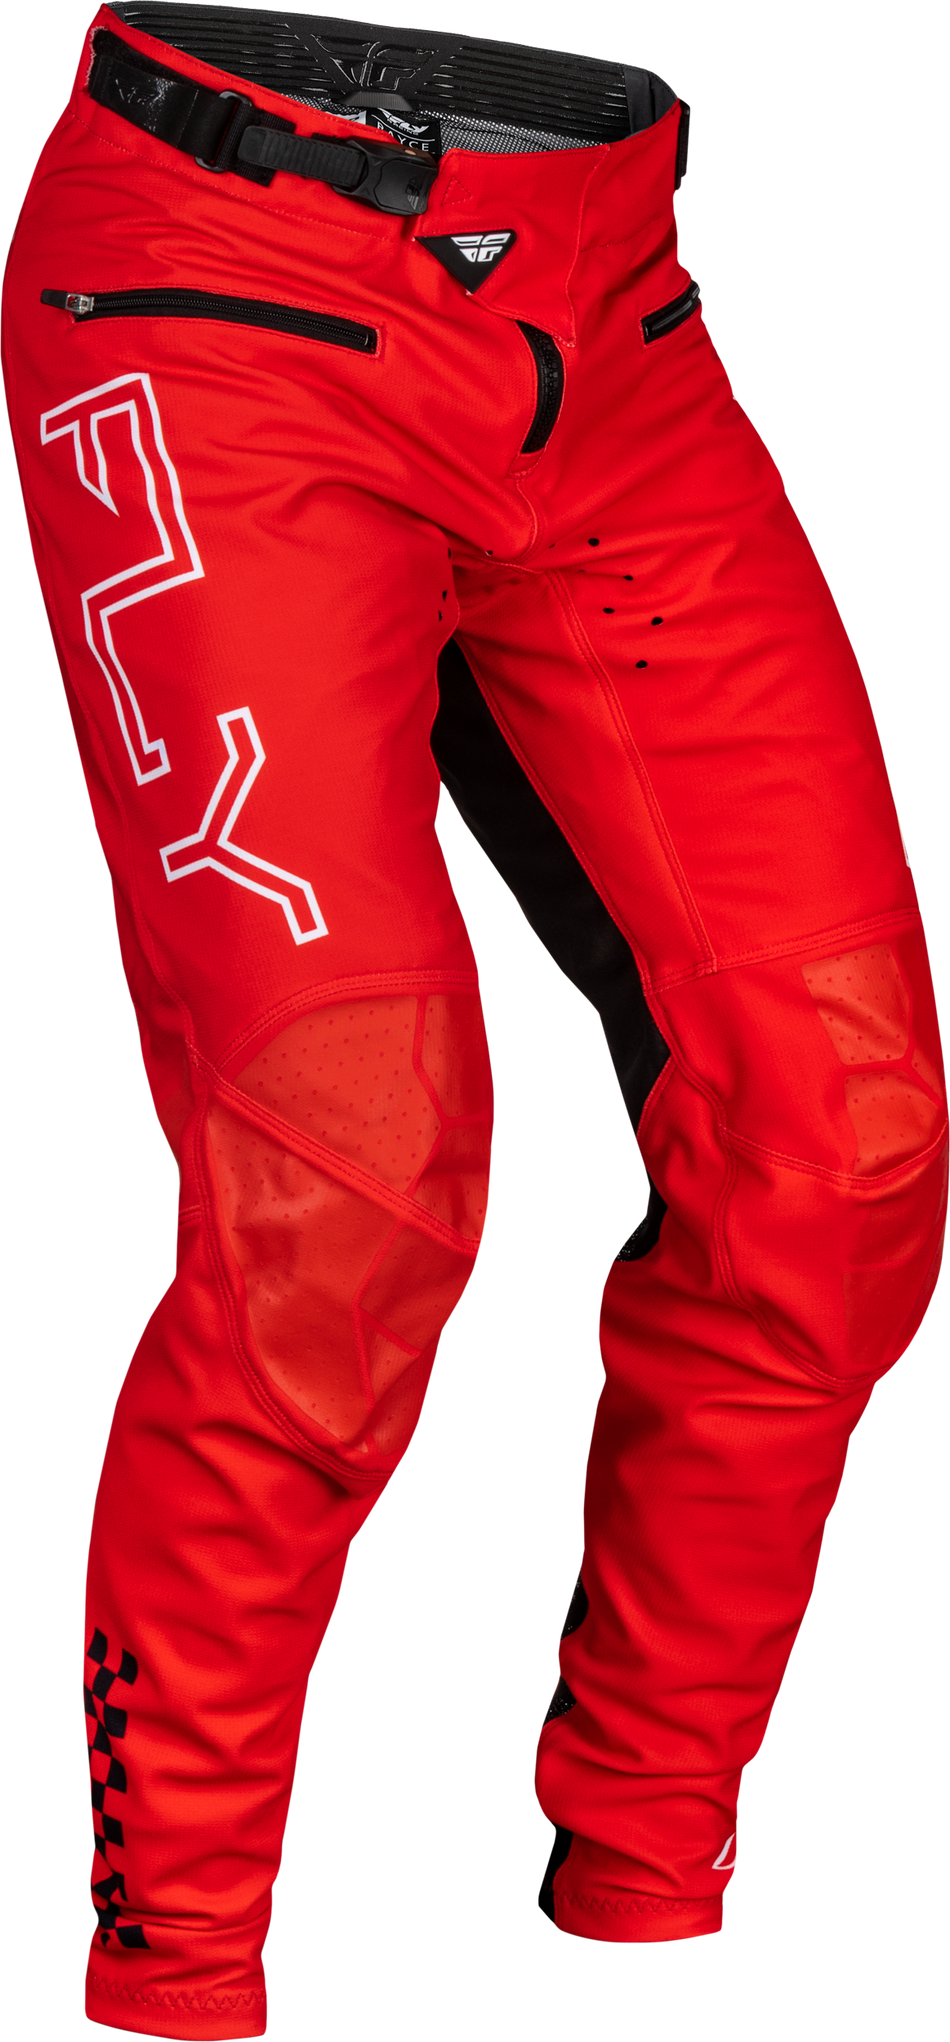 FLY RACING Rayce Bicycle Pants Red Sz 28 377-06328